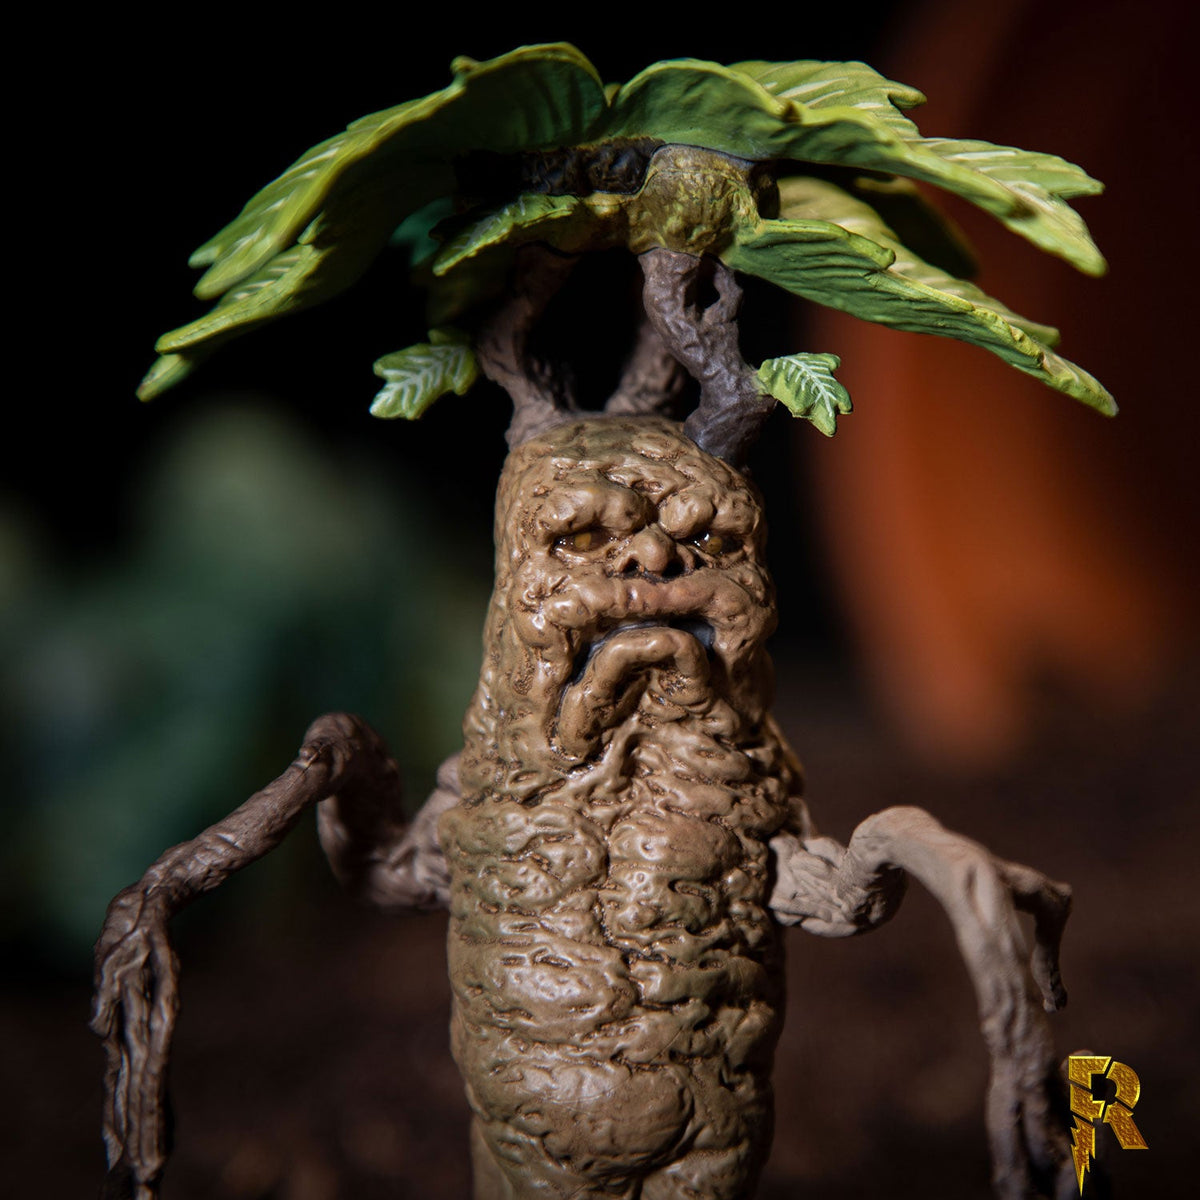 Harry Potter - Créatures magiques - Figurine Mandrake (Mandragore) -  Imagin'ères